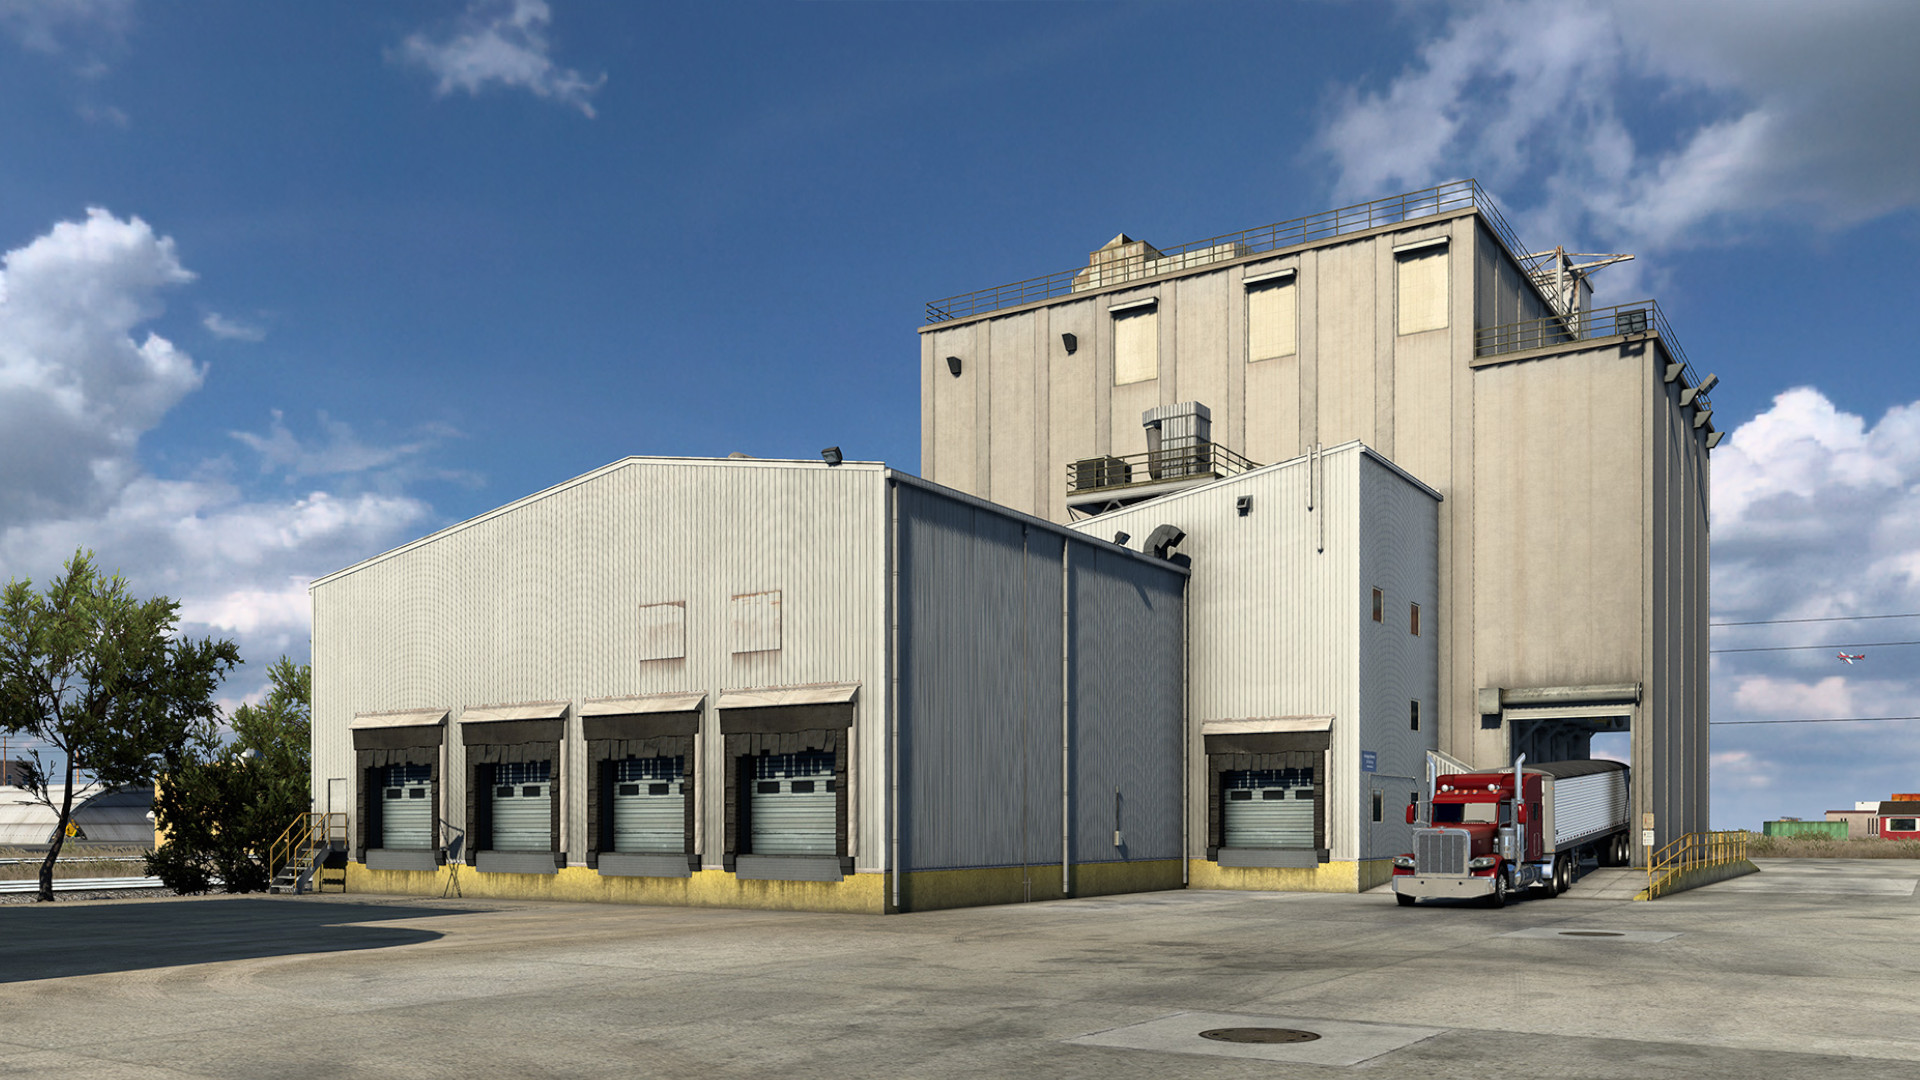 American Truck Simulator devs provide 18 screenshots of upcoming industrial buildings